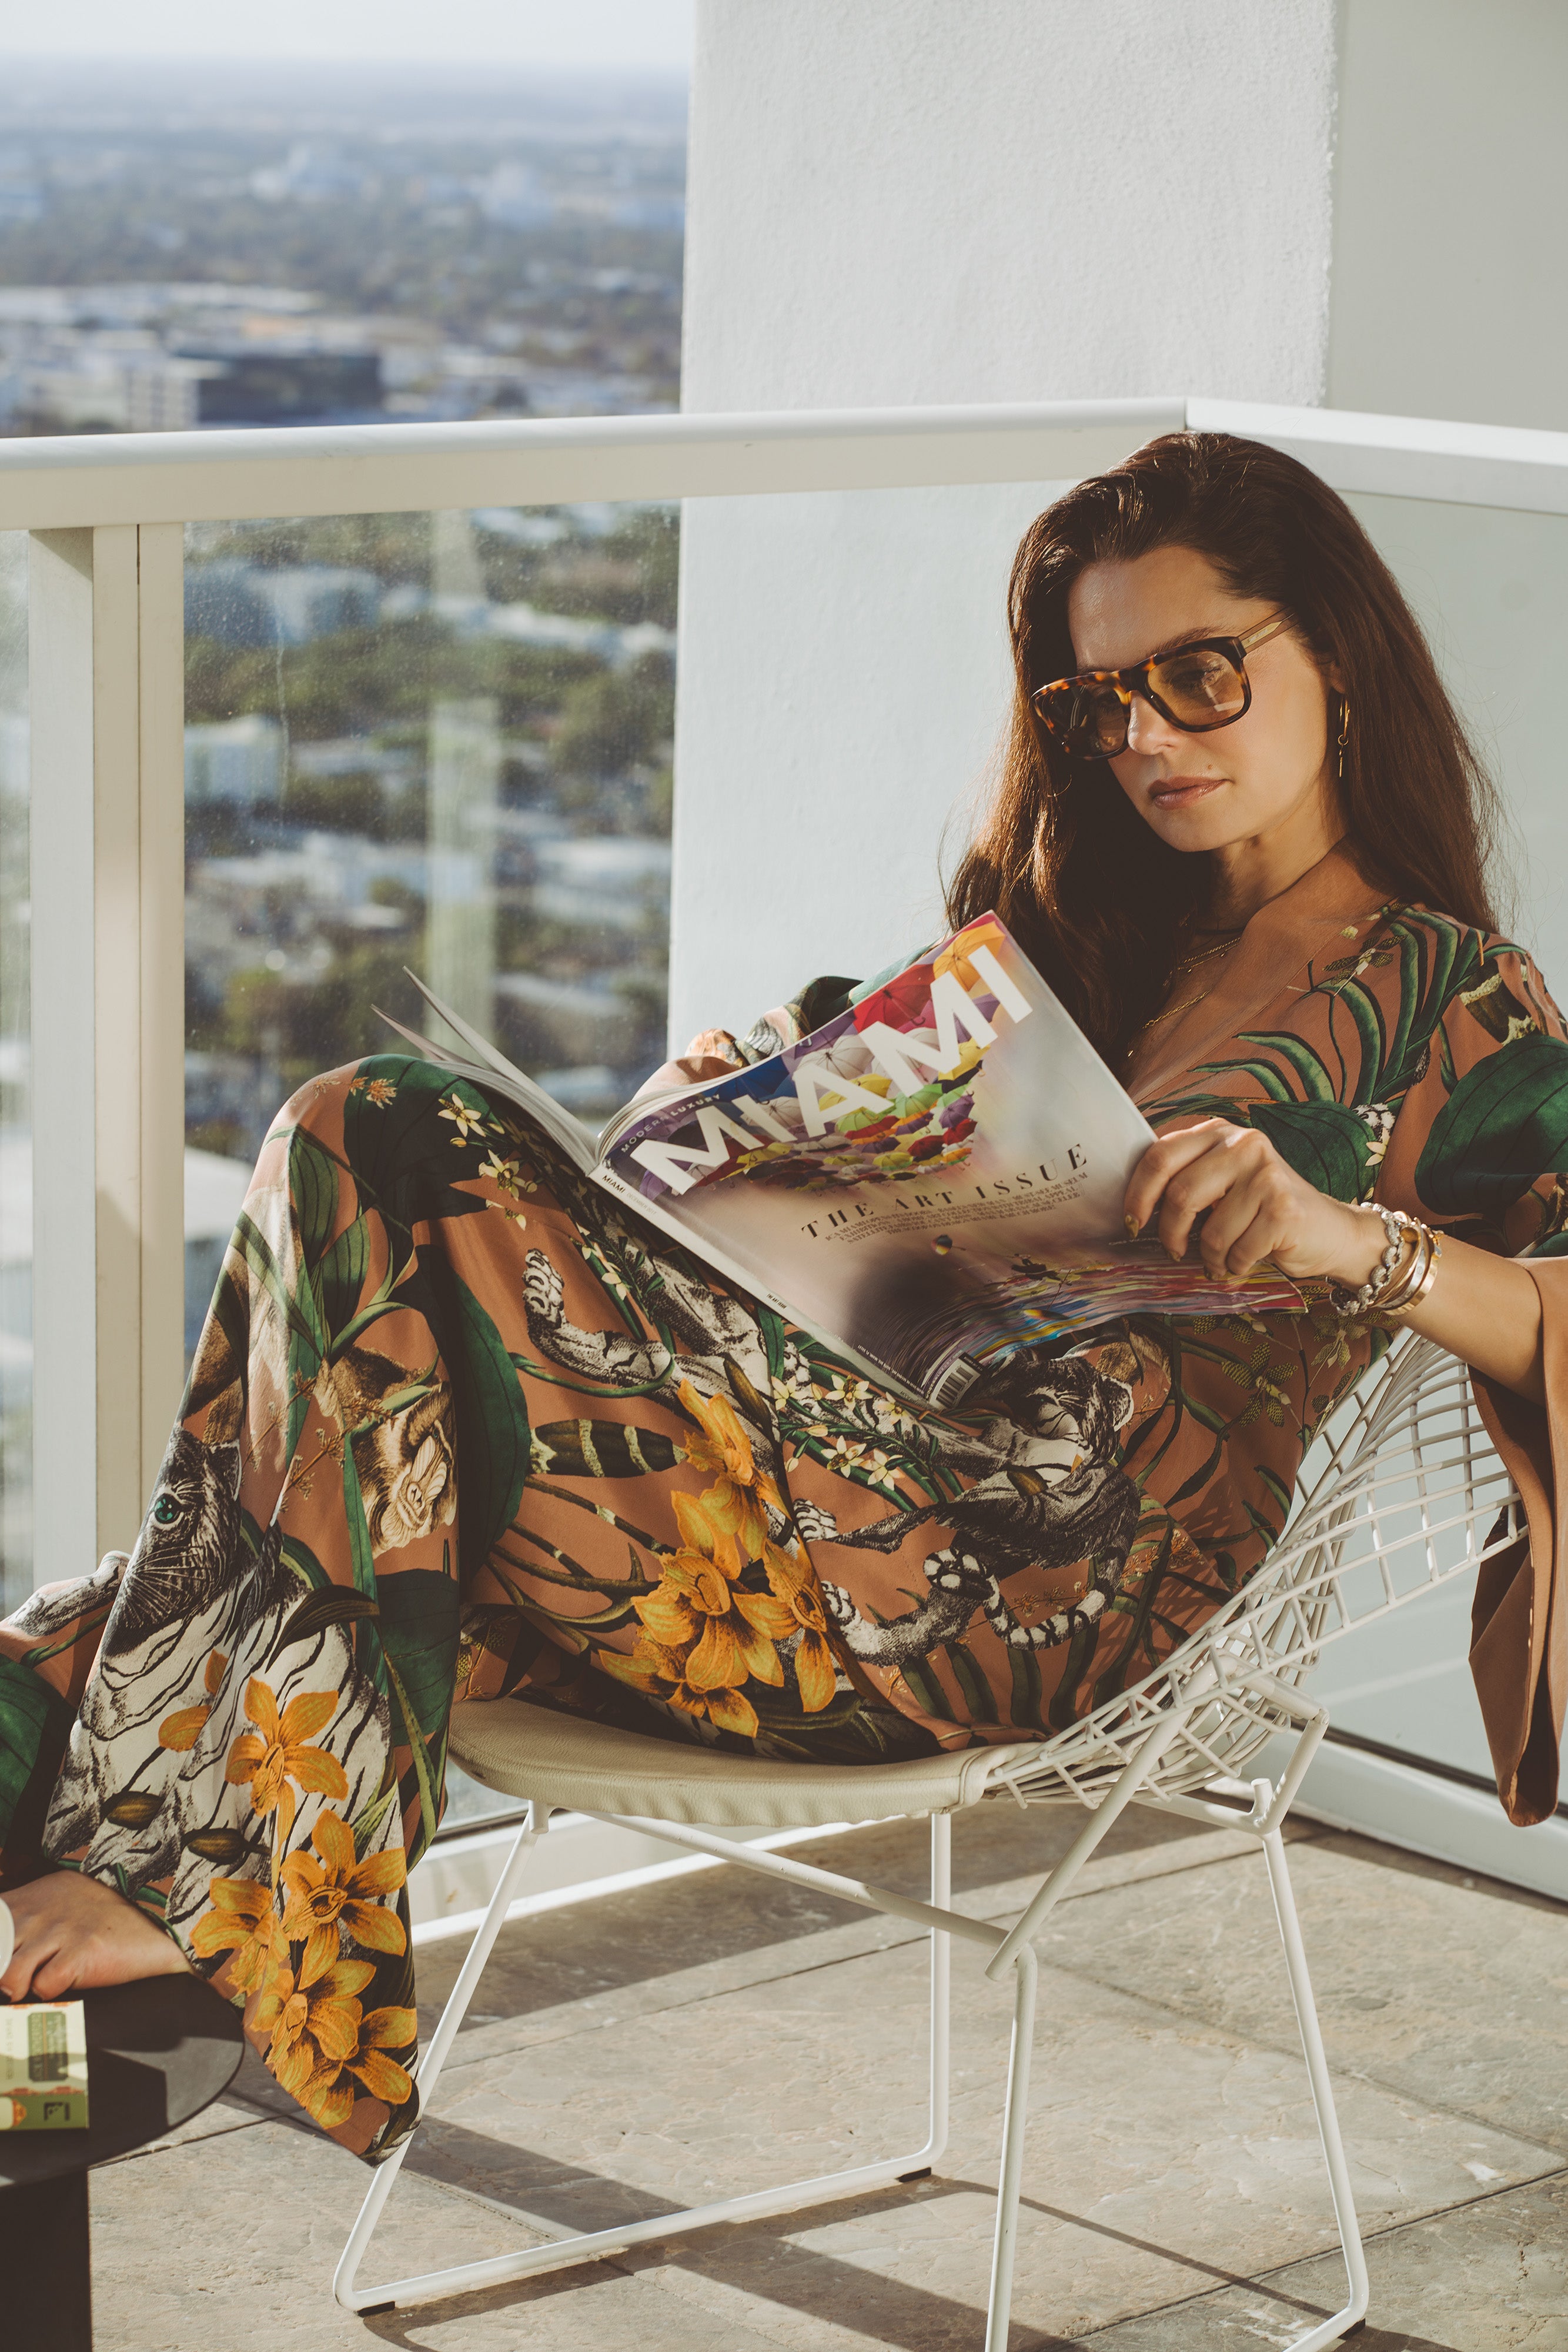 Madlena Kalinova reading a magazine